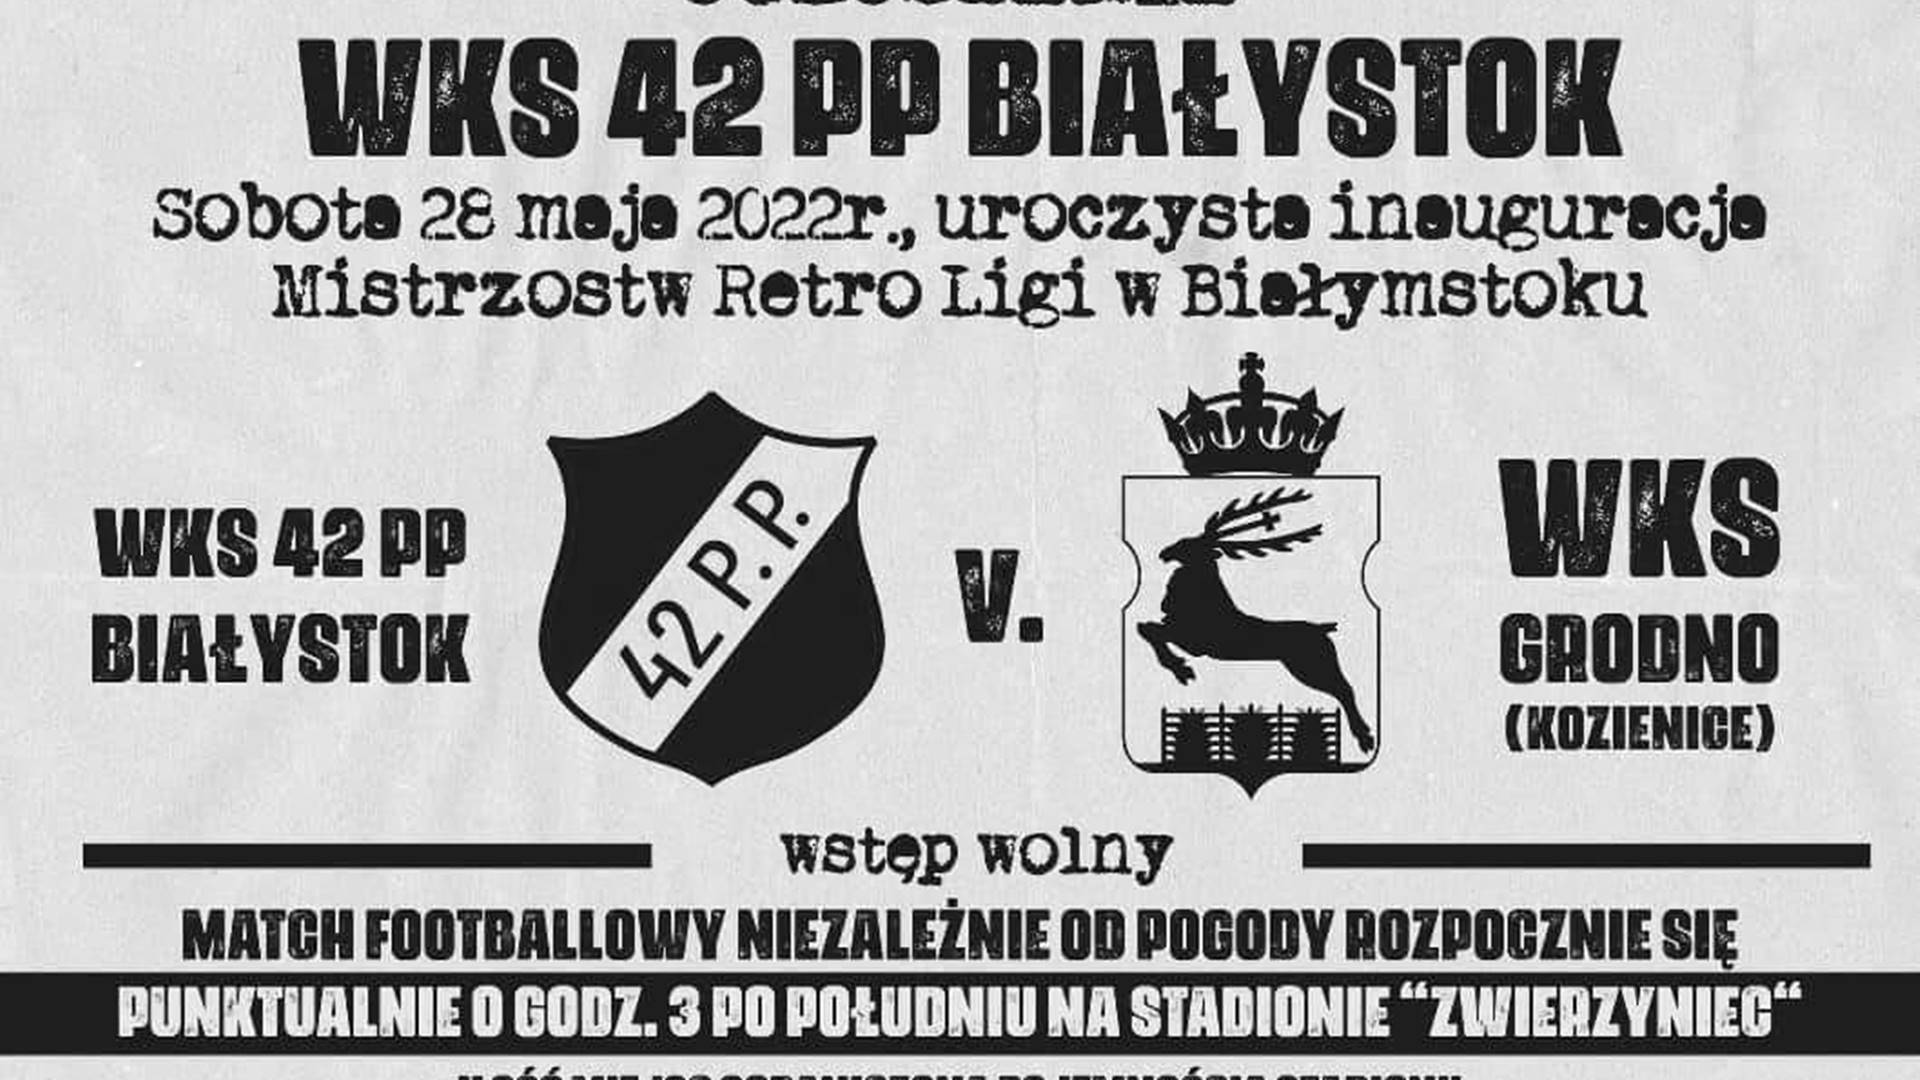 Źródło: WKS 42 PP Białystok / Facebook